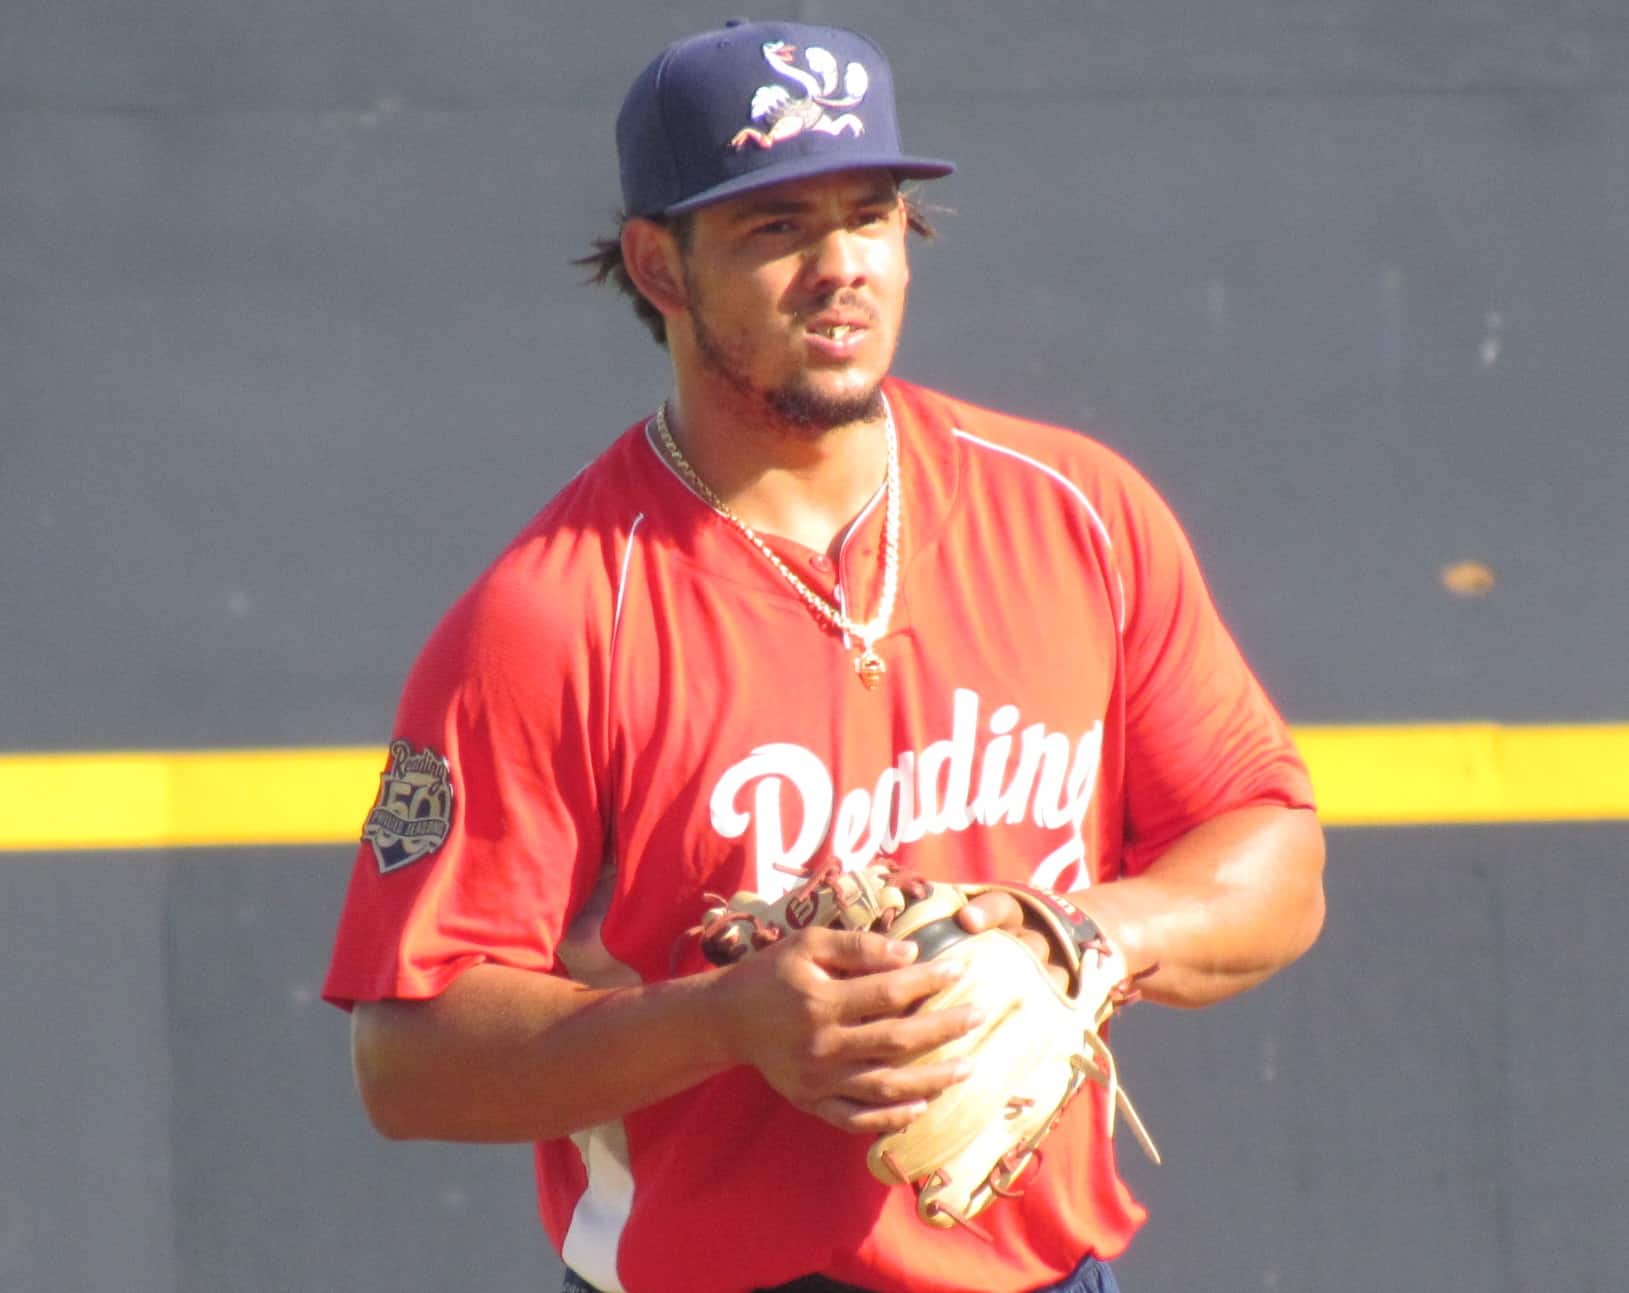 Phillies catcher Jorge Alfaro hopes hard work will make dream come true